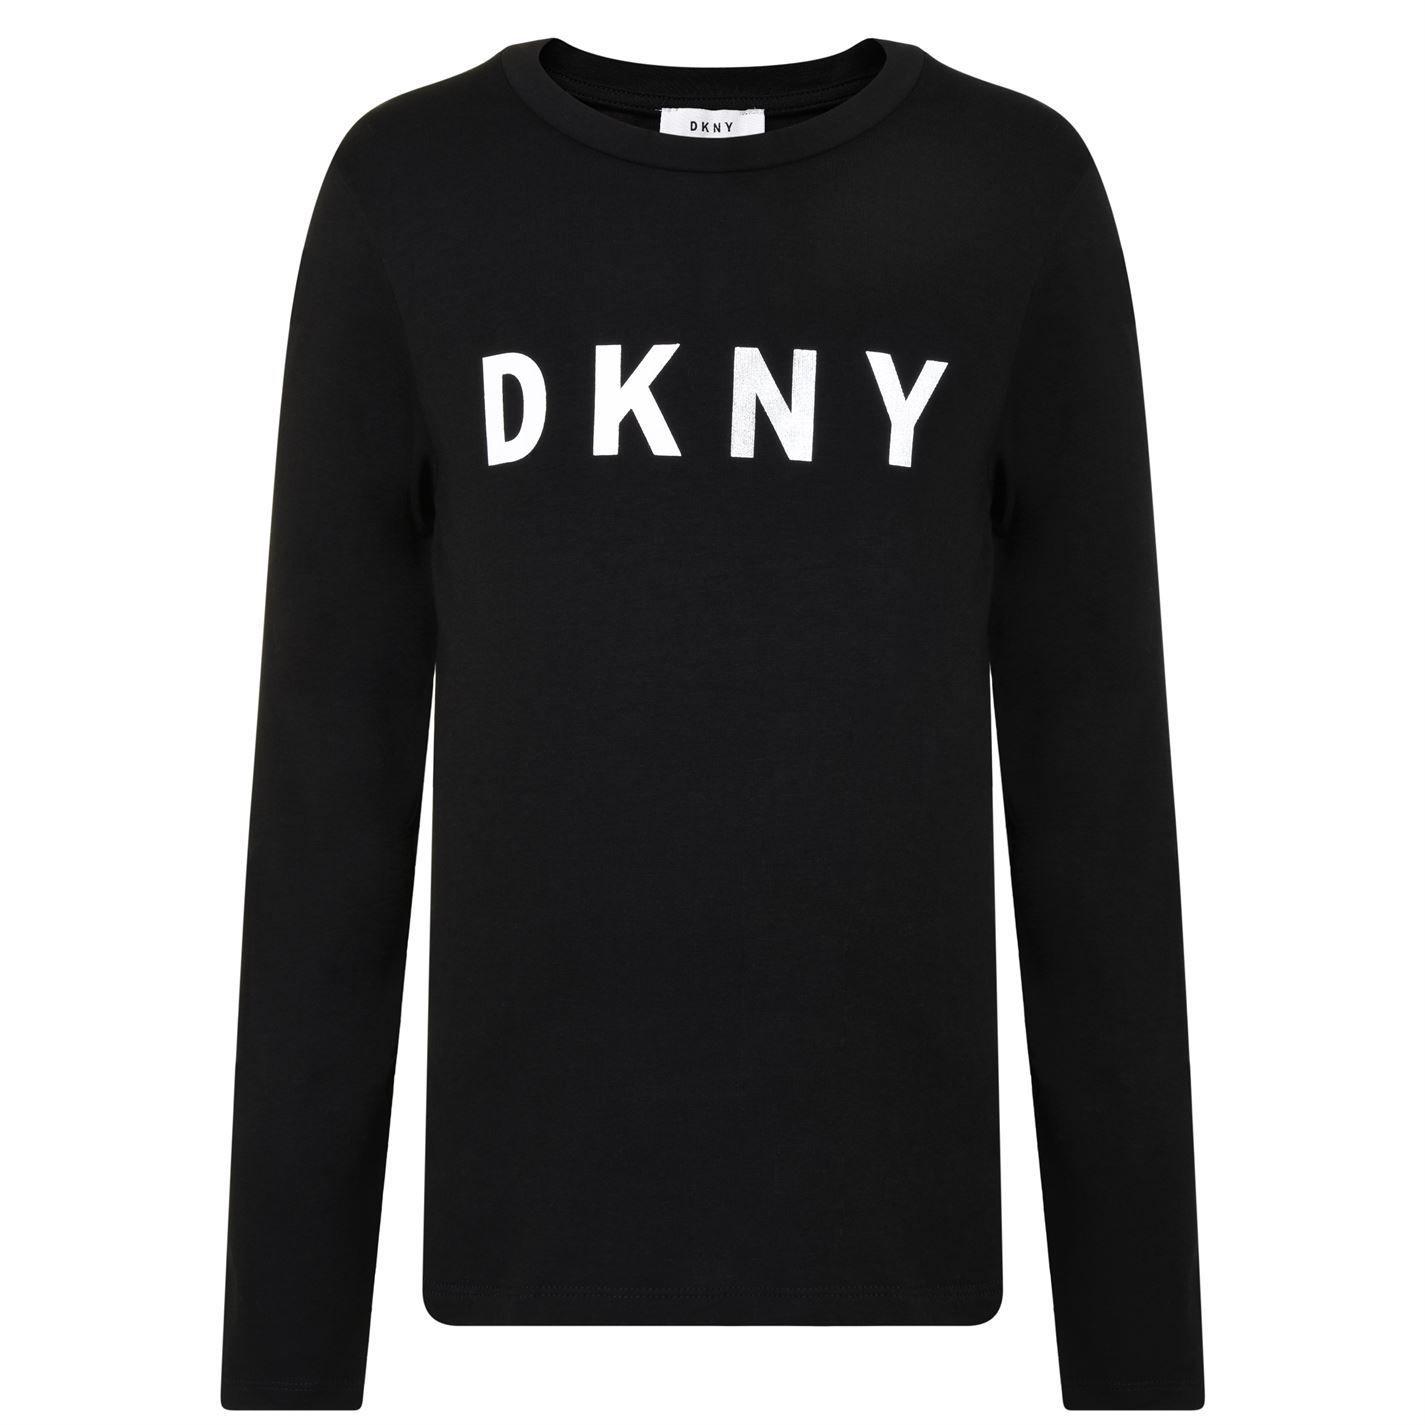 DKNY Logo - Kids Girls DKNY Logo T Shirt Crew Neck Long Sleeve New